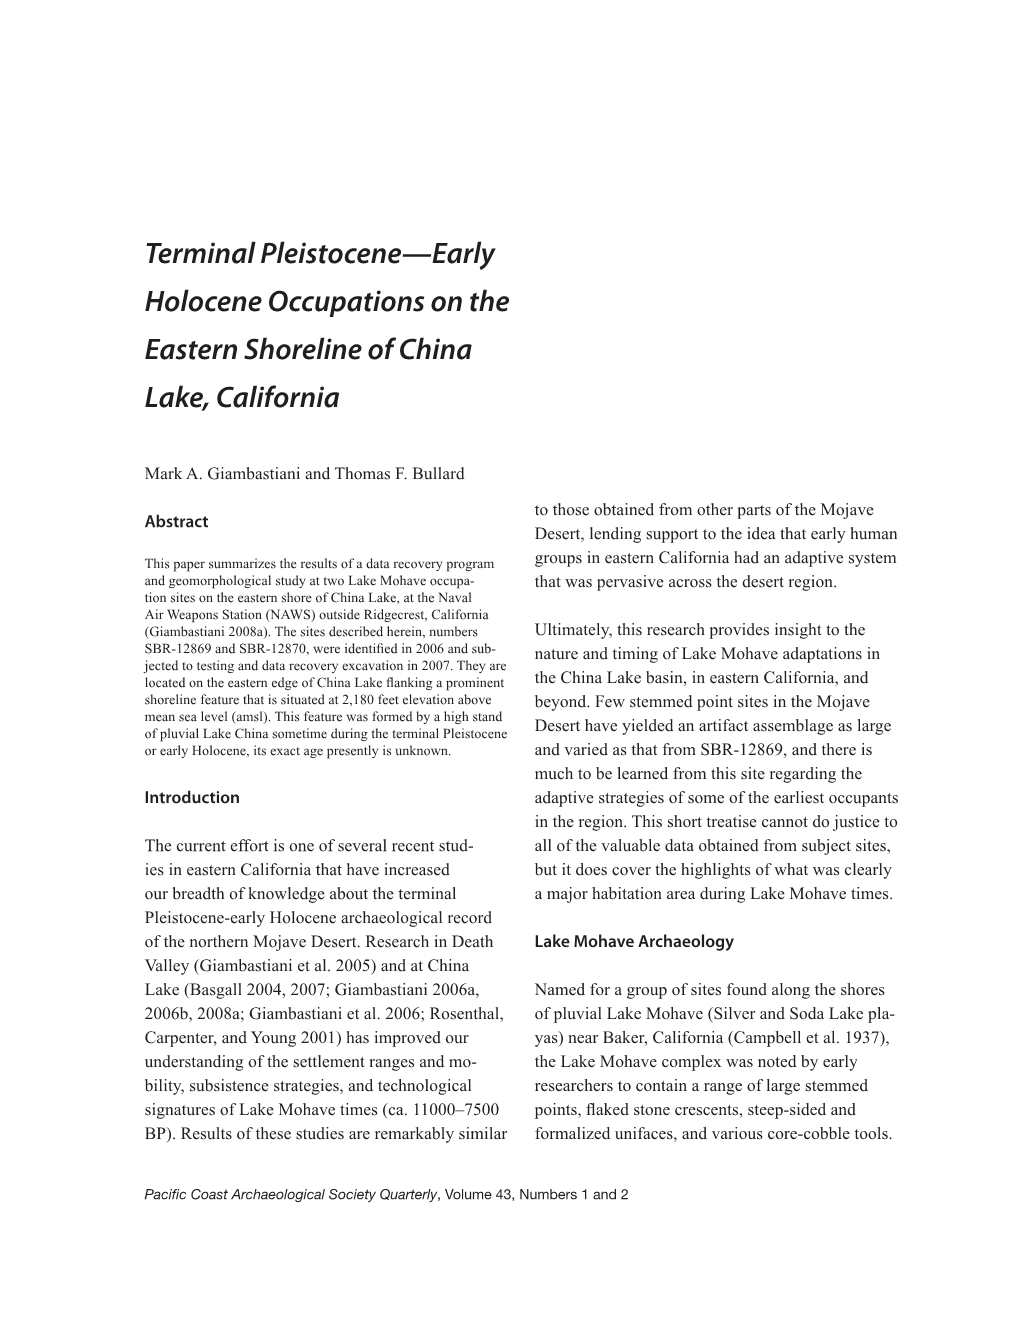 Terminal Pleistocene—Early Holocene Occupations on the Eastern Shoreline of China Lake, California